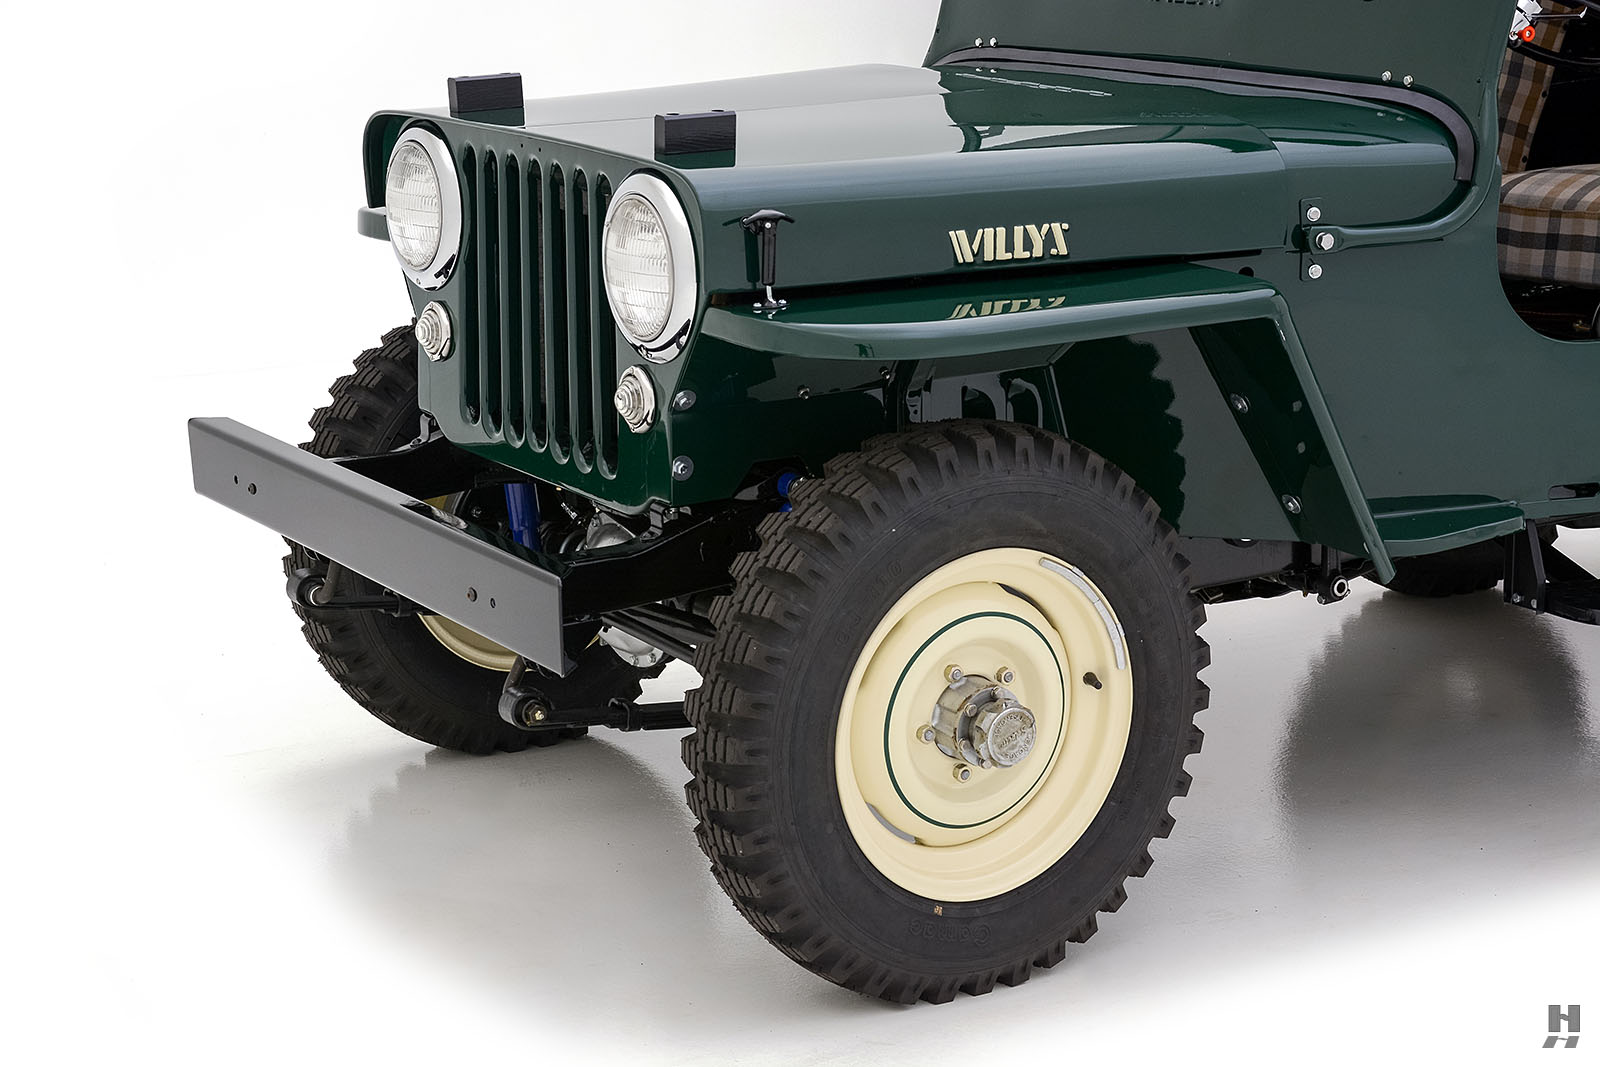 1957 willys-jeep cj-3b 1/4 ton